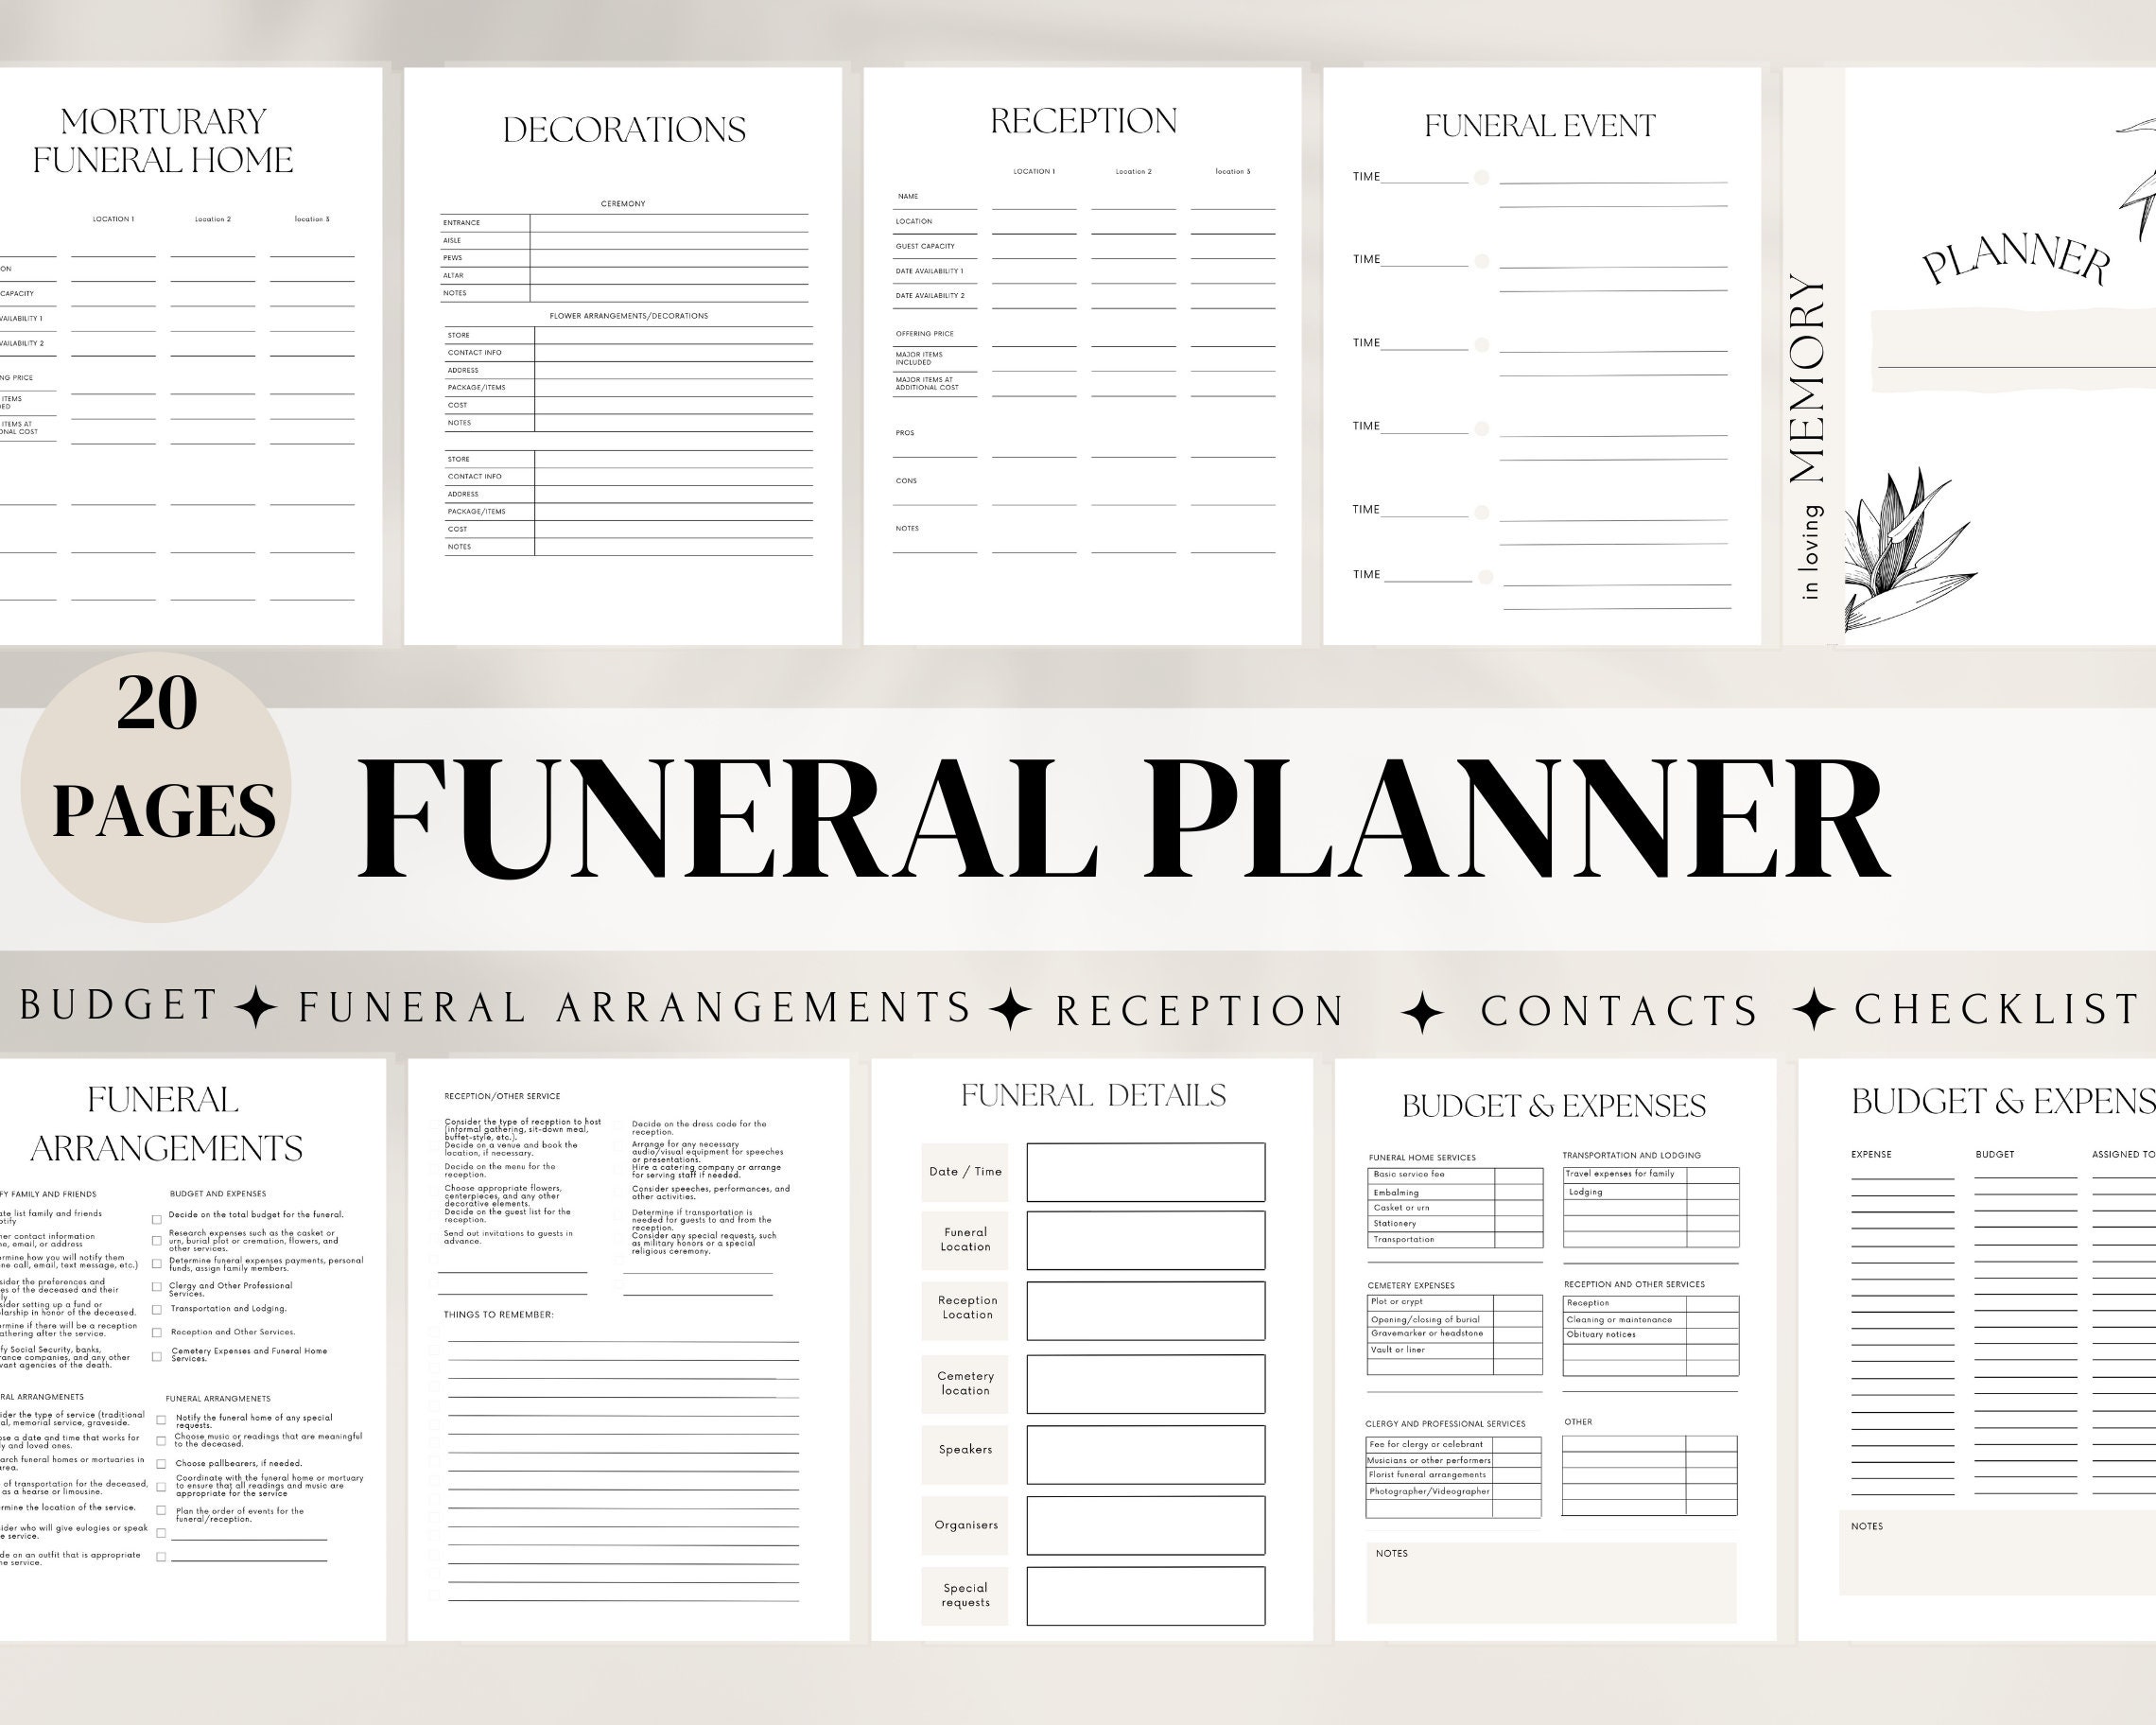 Funeral Arrangements Brooklyn — Checklist